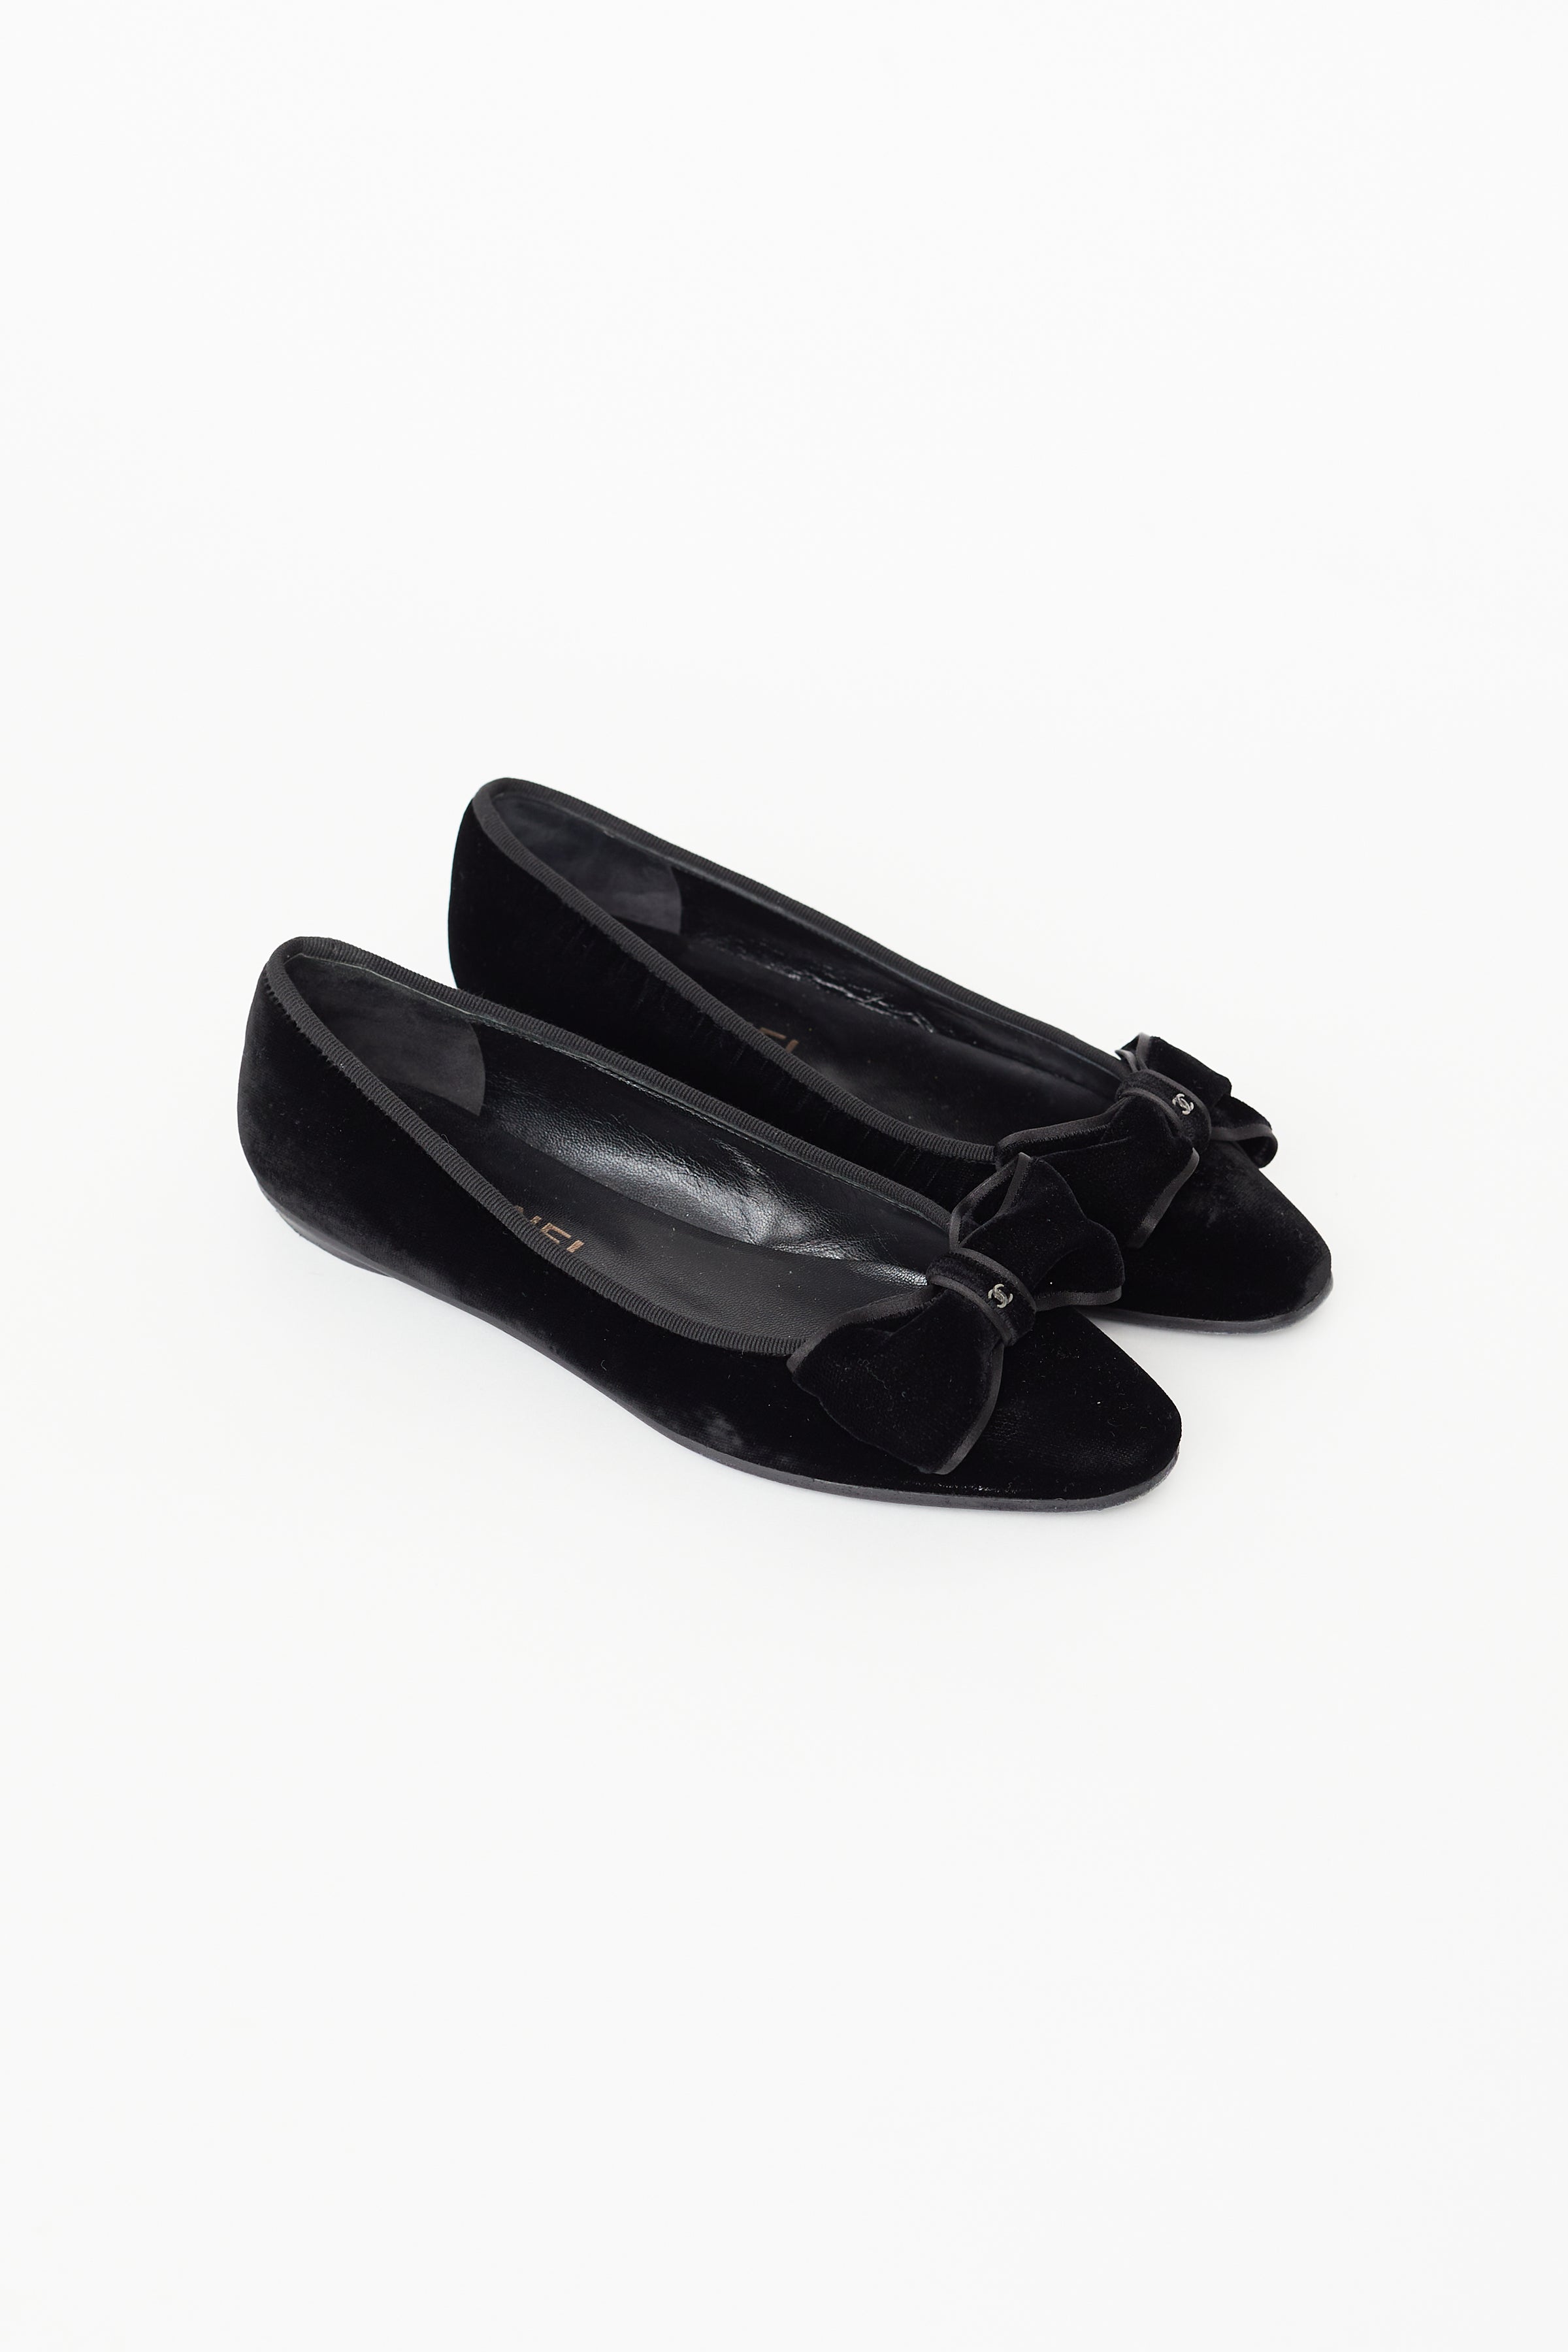 Chanel - Authenticated Ballet Flats - Velvet Black for Women, Good Condition